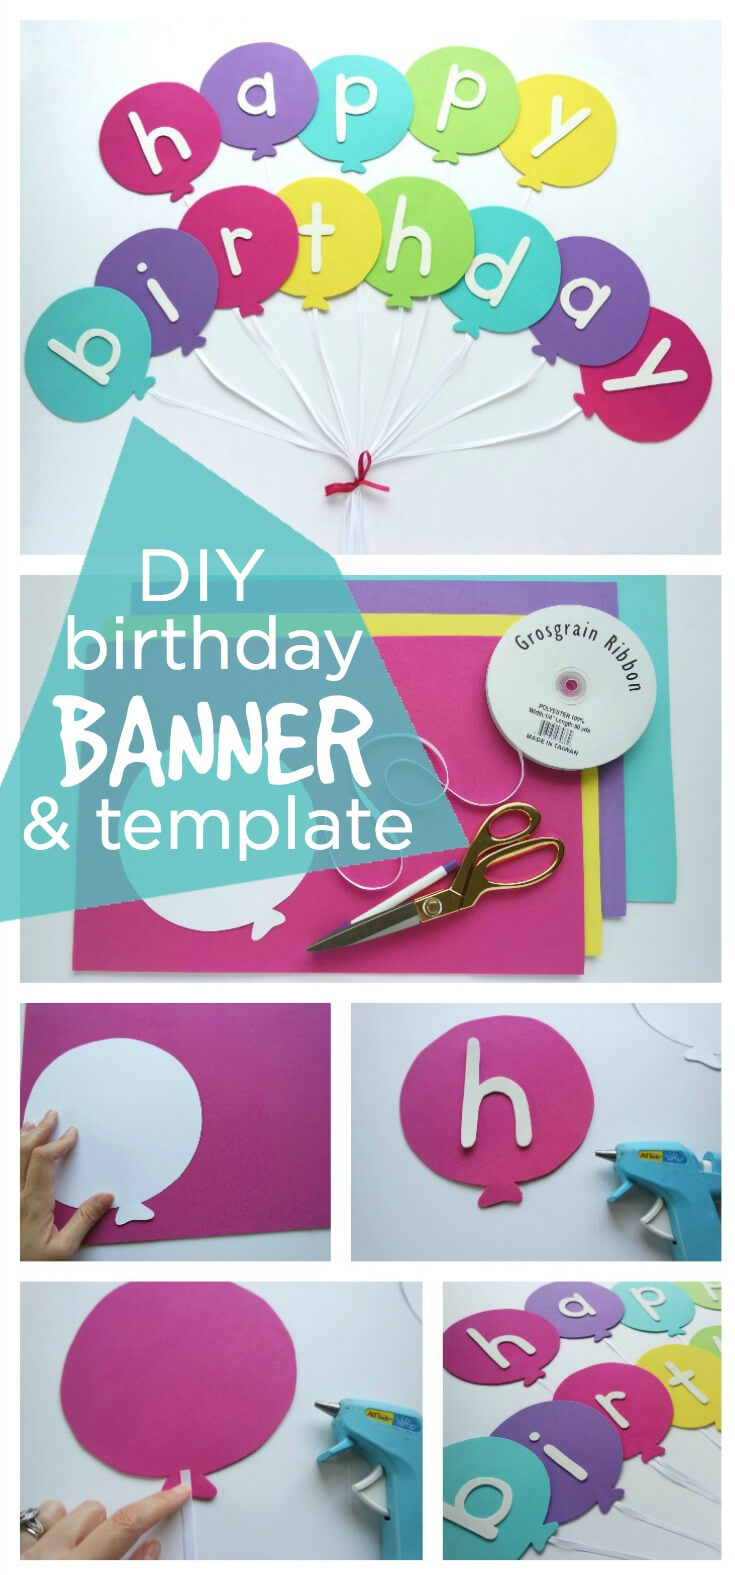 Happy Birthday Banner Diy Template | Balloon Birthday Banner In Diy Party Banner Template